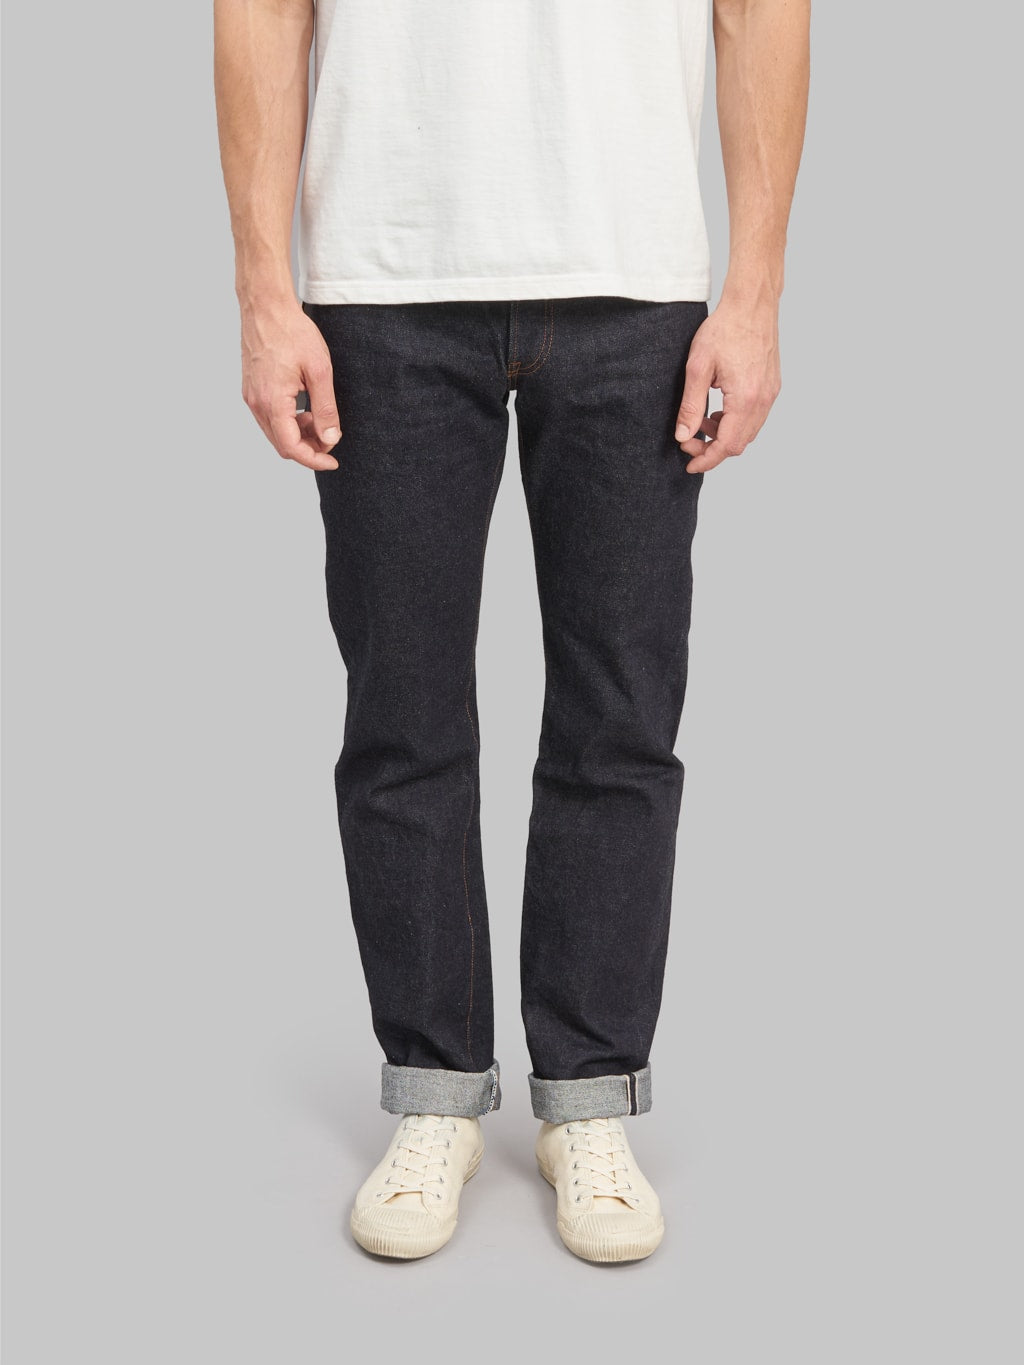 studio dartisan sd 103 15oz tight straight selvedge jeans front fit